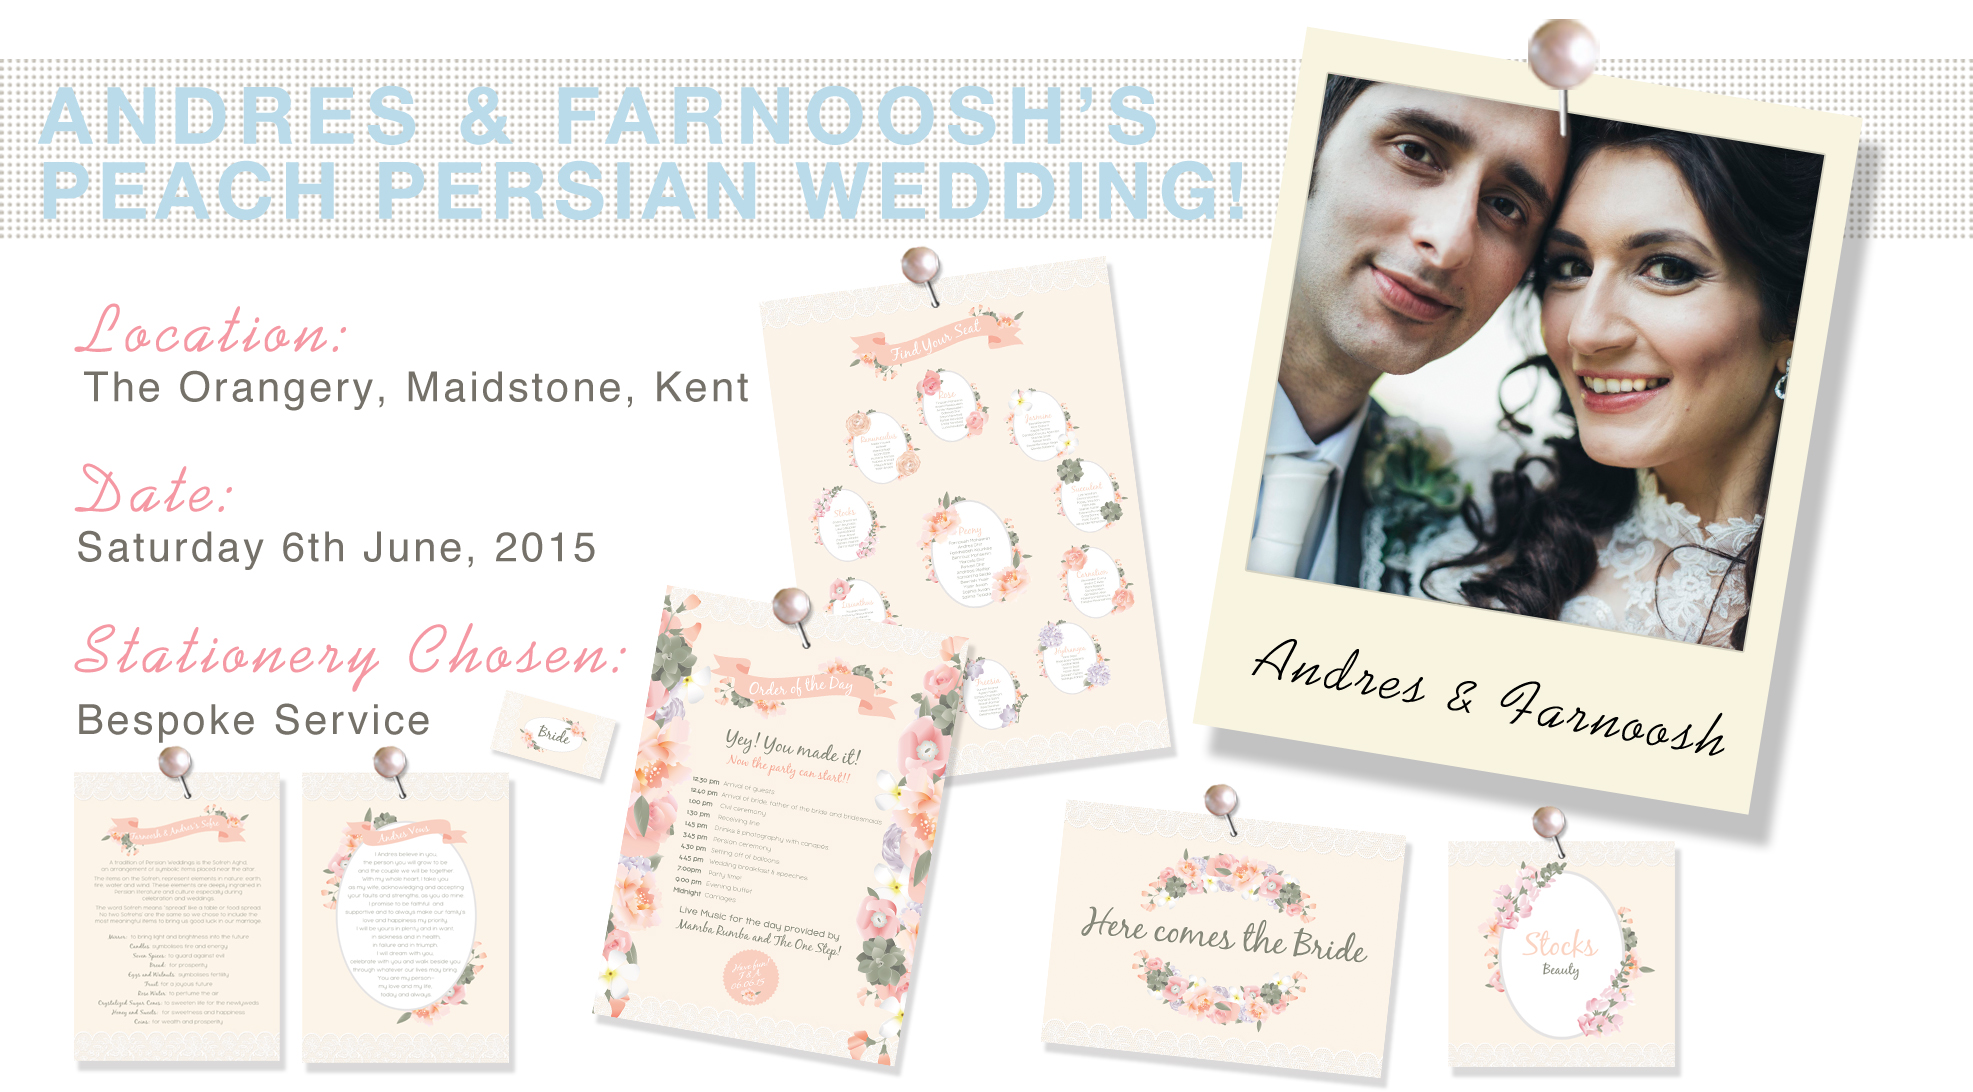 Andres & Farnoosh’s Kent Wedding